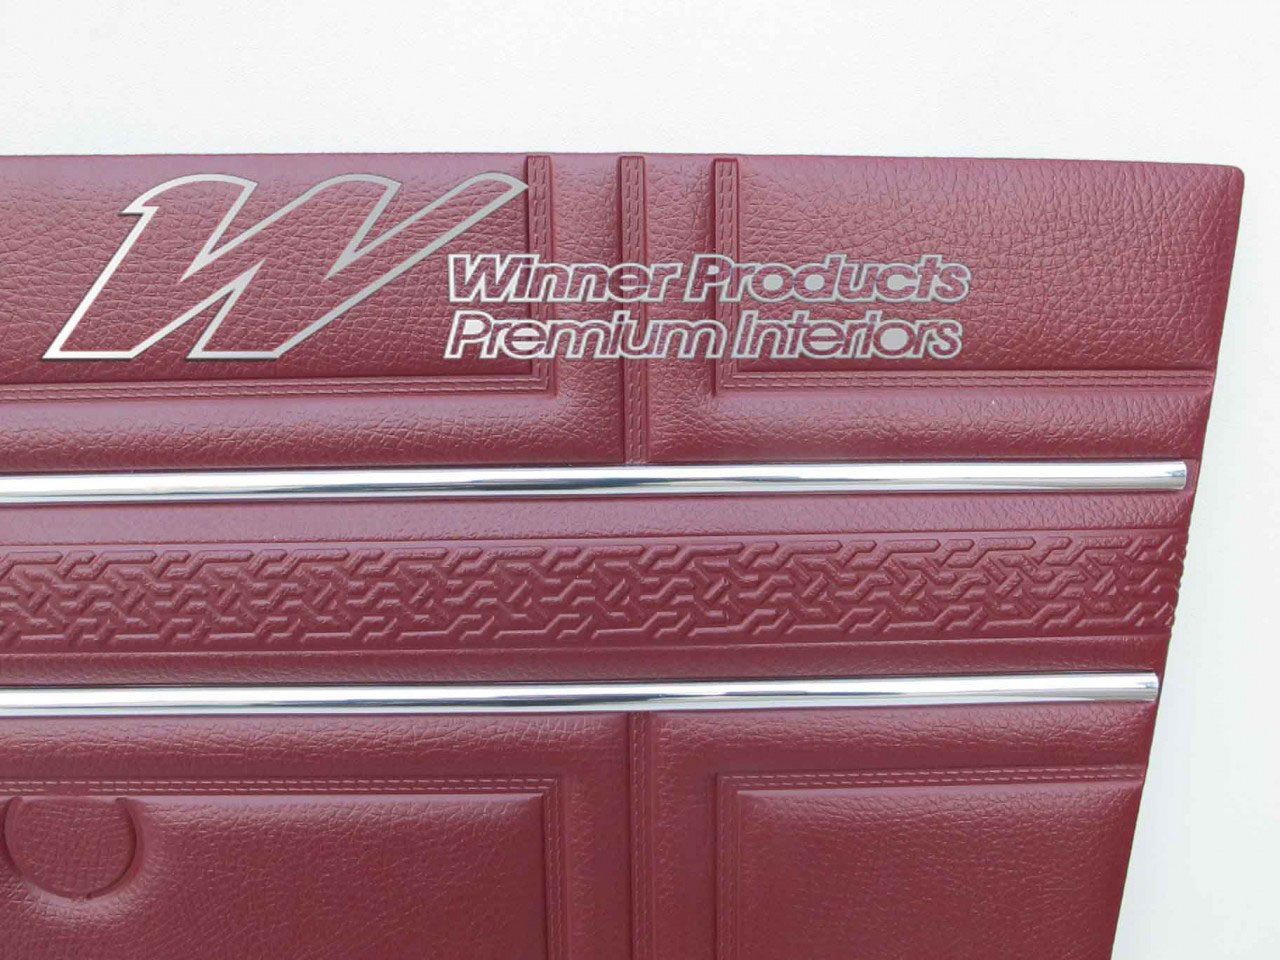 Holden Kingswood HT Kingswood Wagon 12G Morocco Red & Castillion Weave Door Trims (Image 3 of 3)